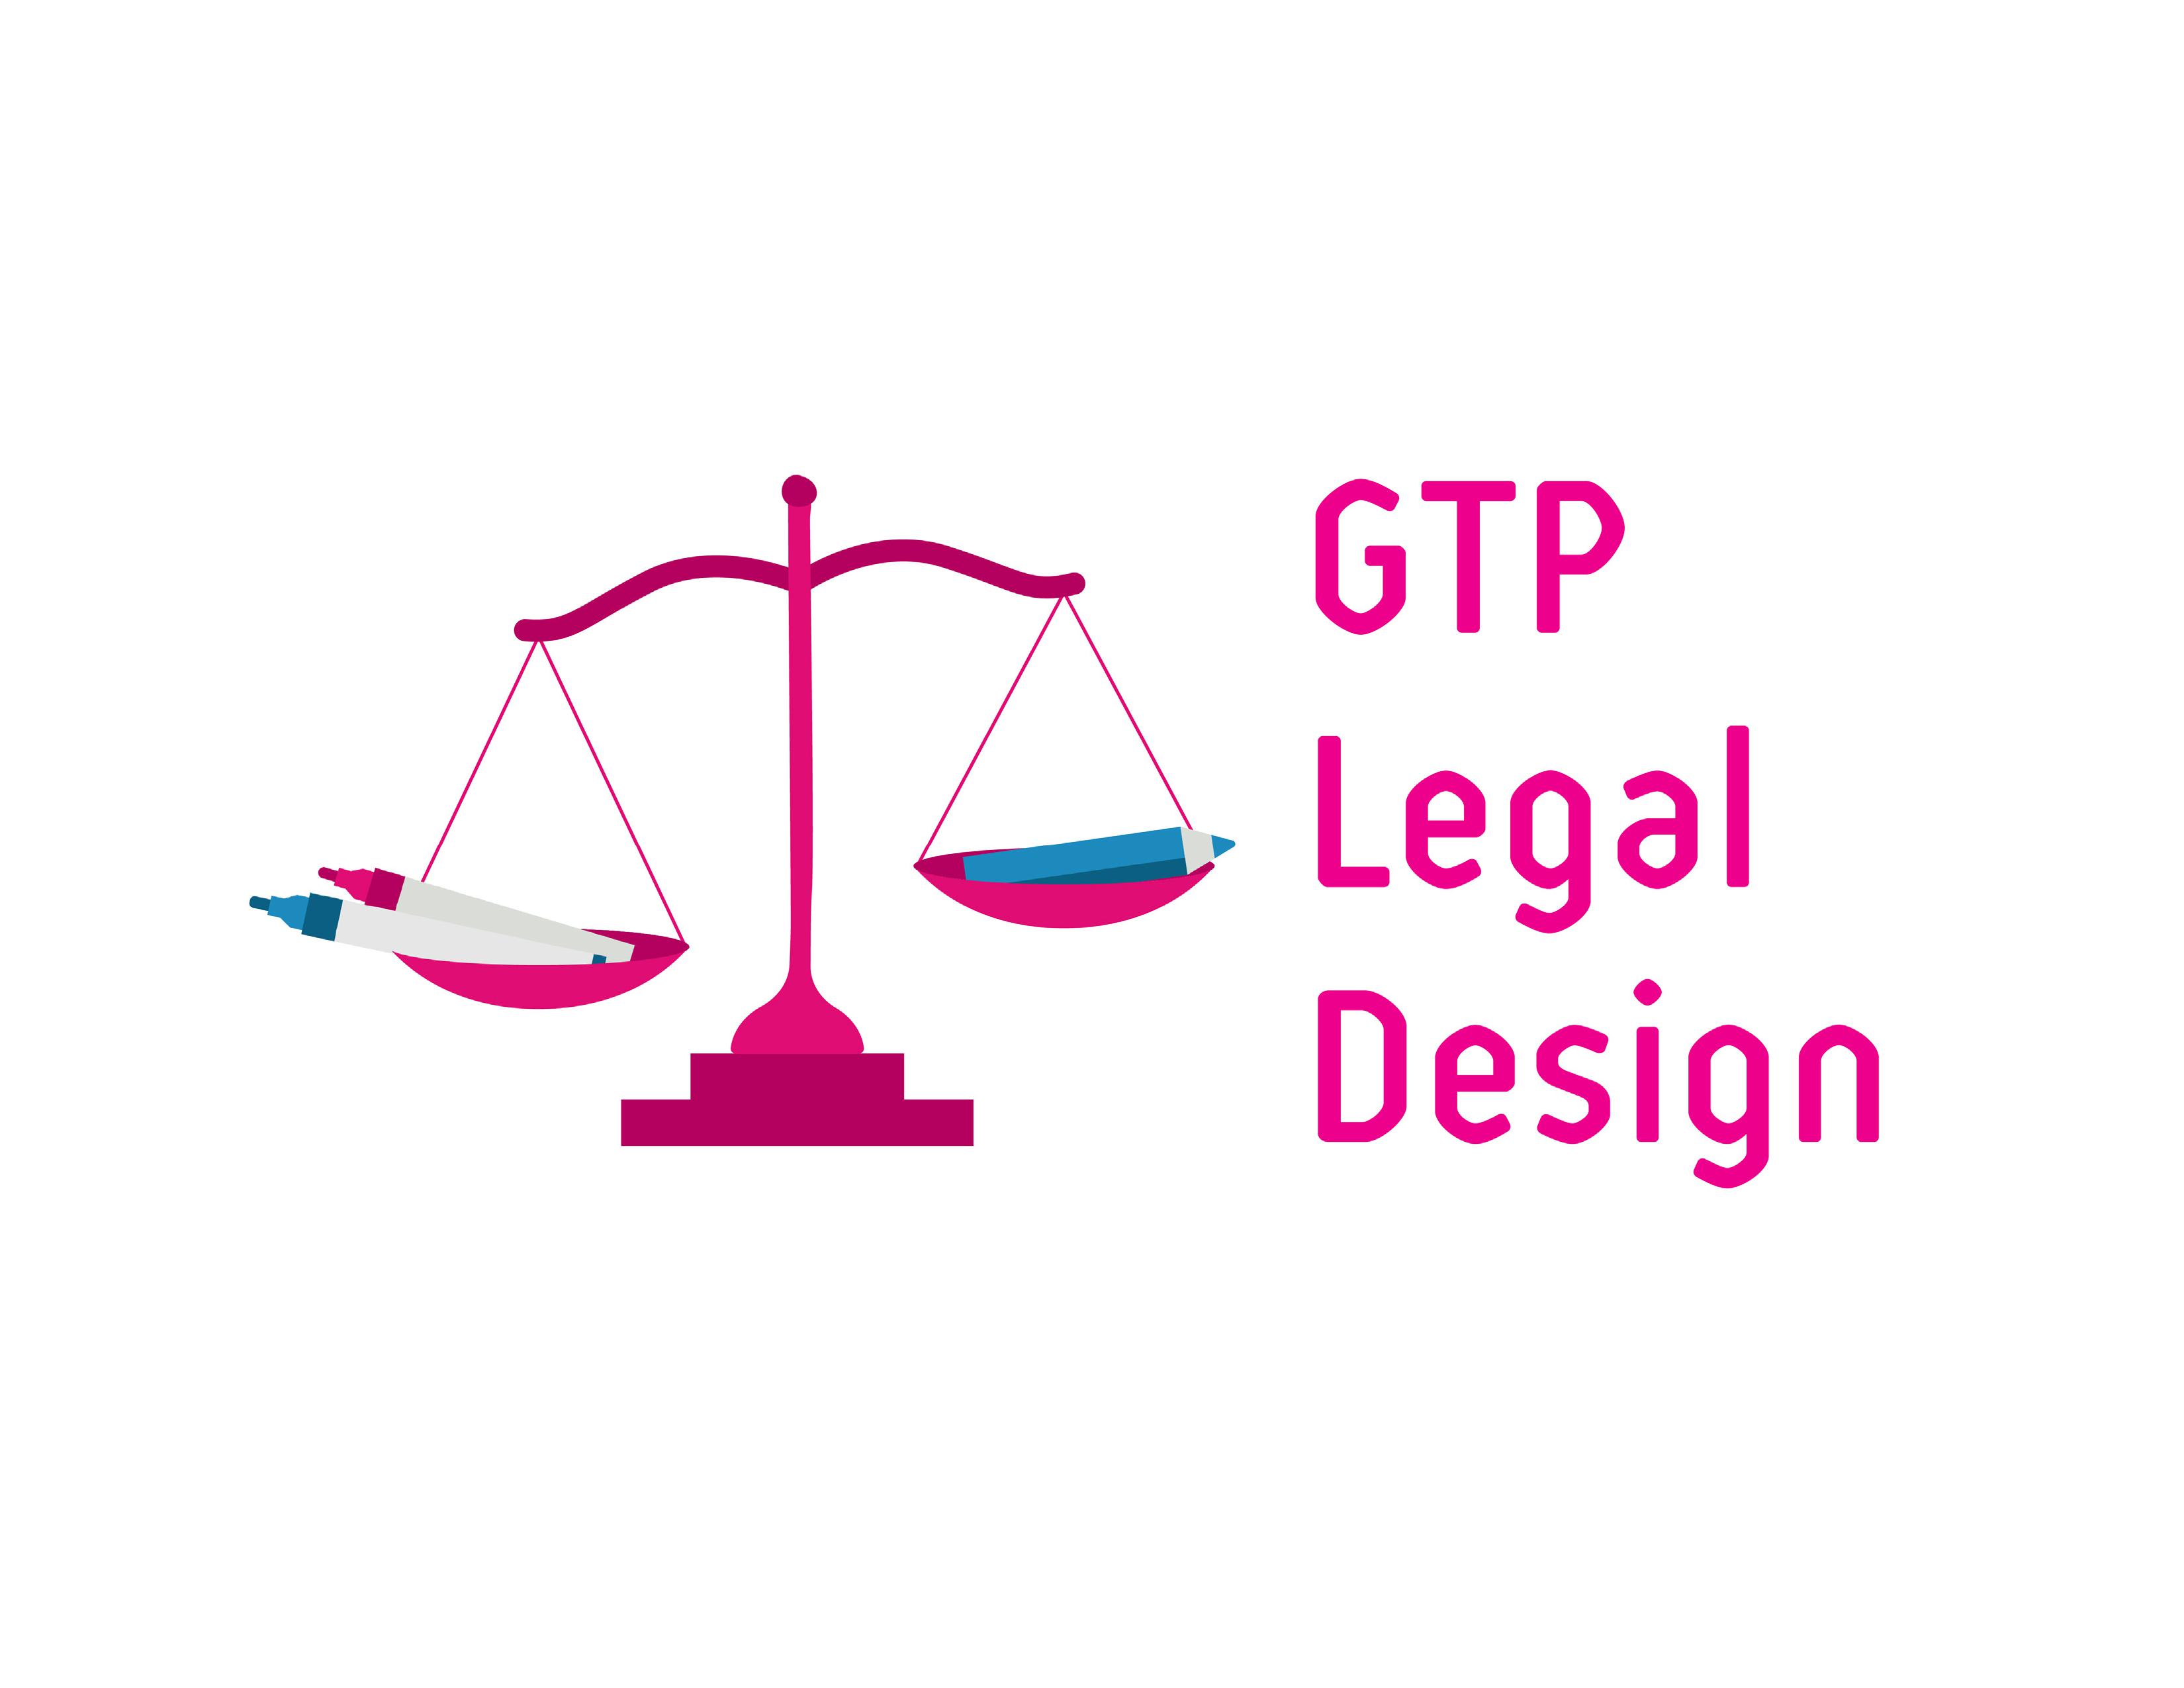 GTP Legal Design Banner